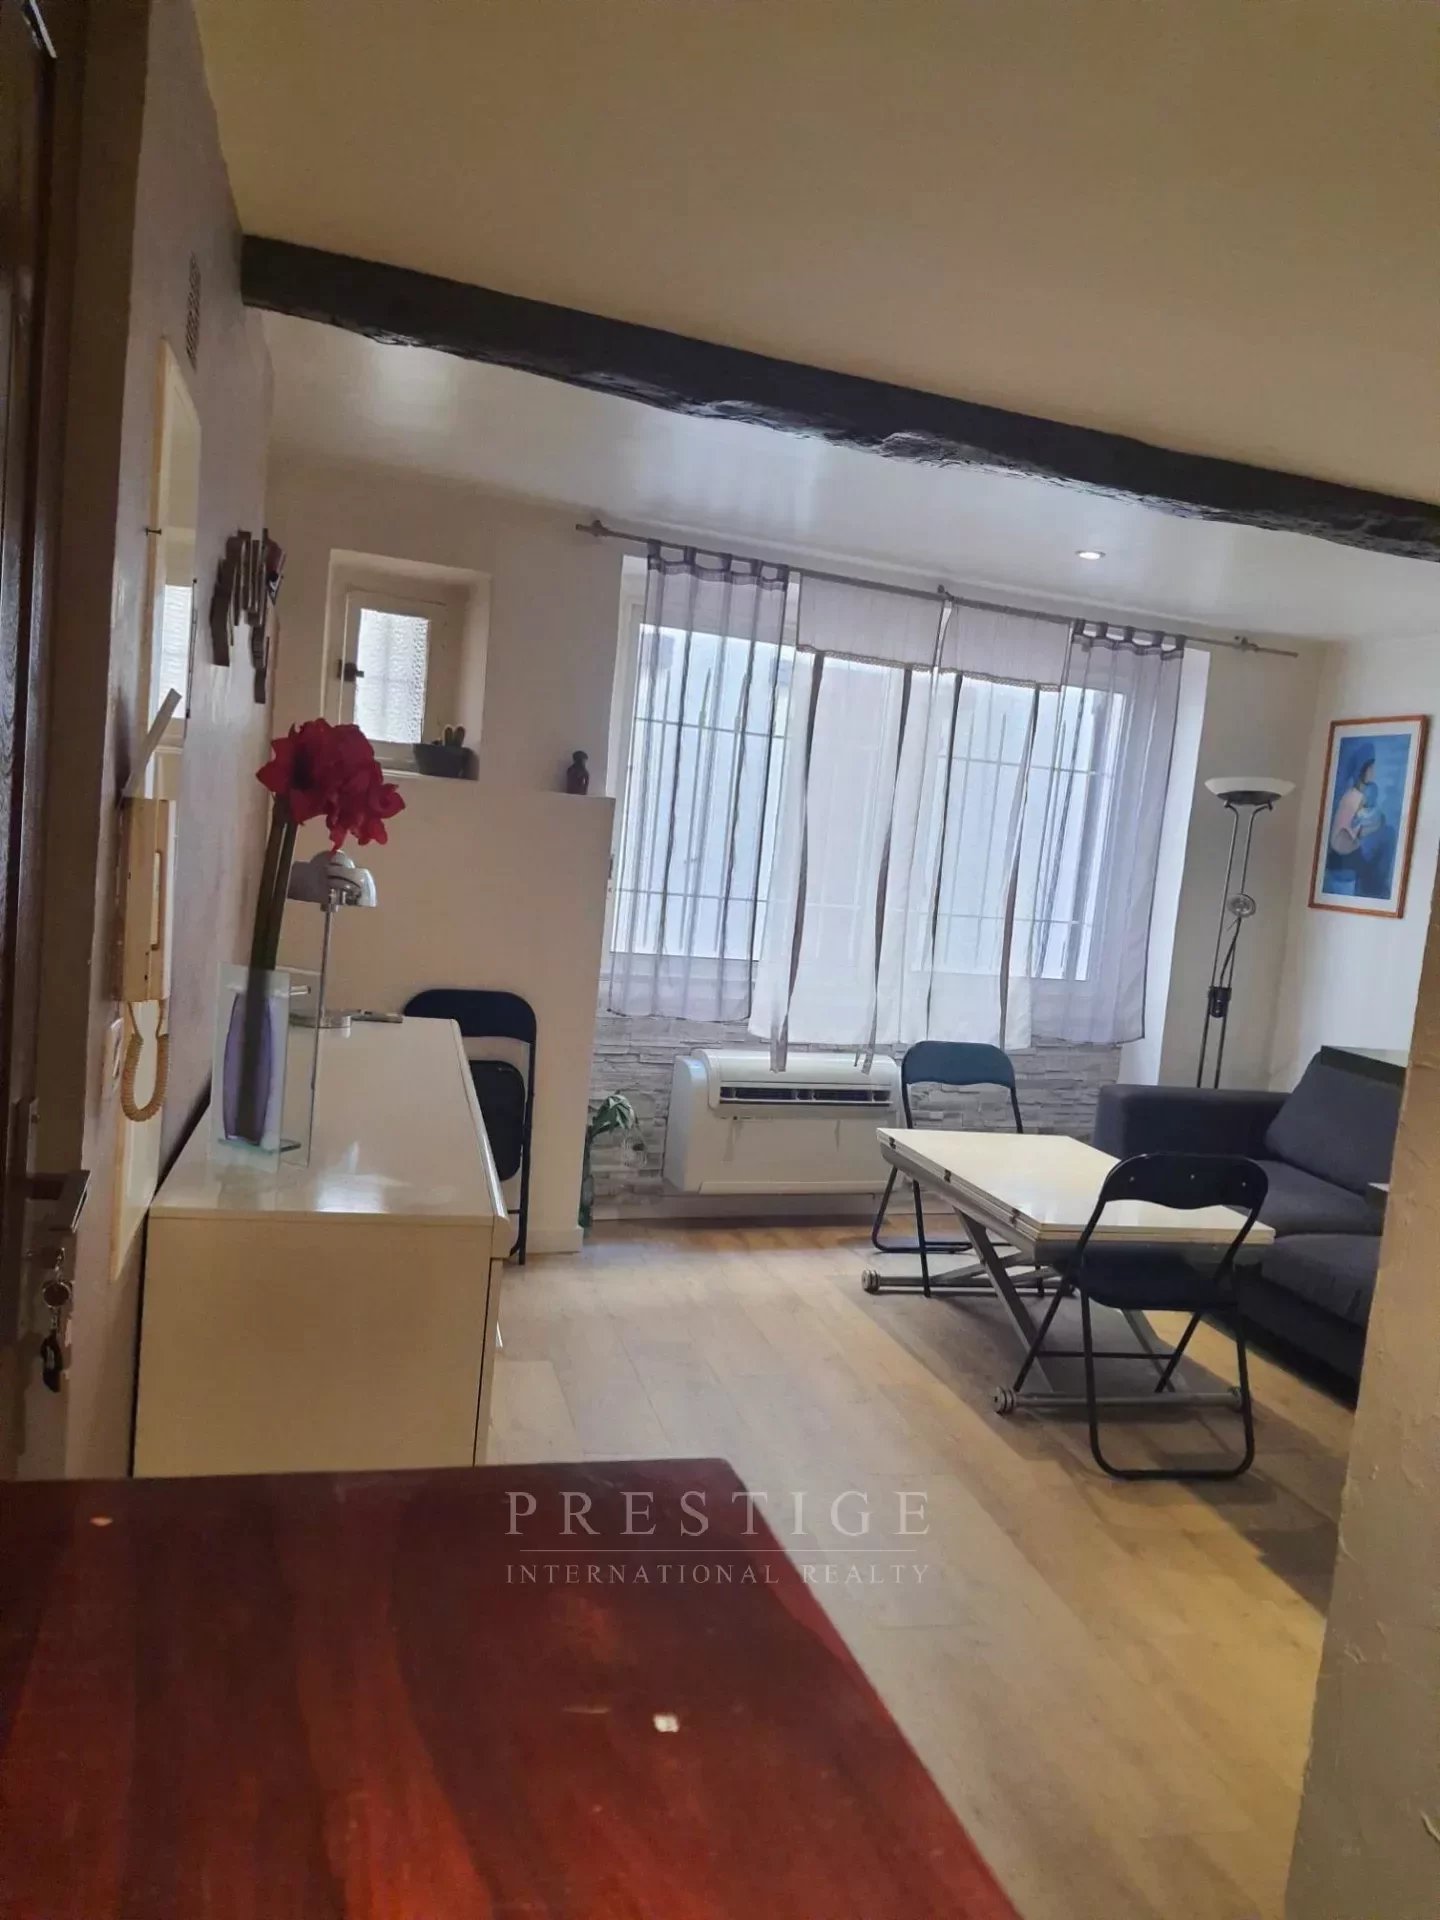 Vente Appartement 38m² 2 Pièces à Antibes (06600) - Riviera Immo